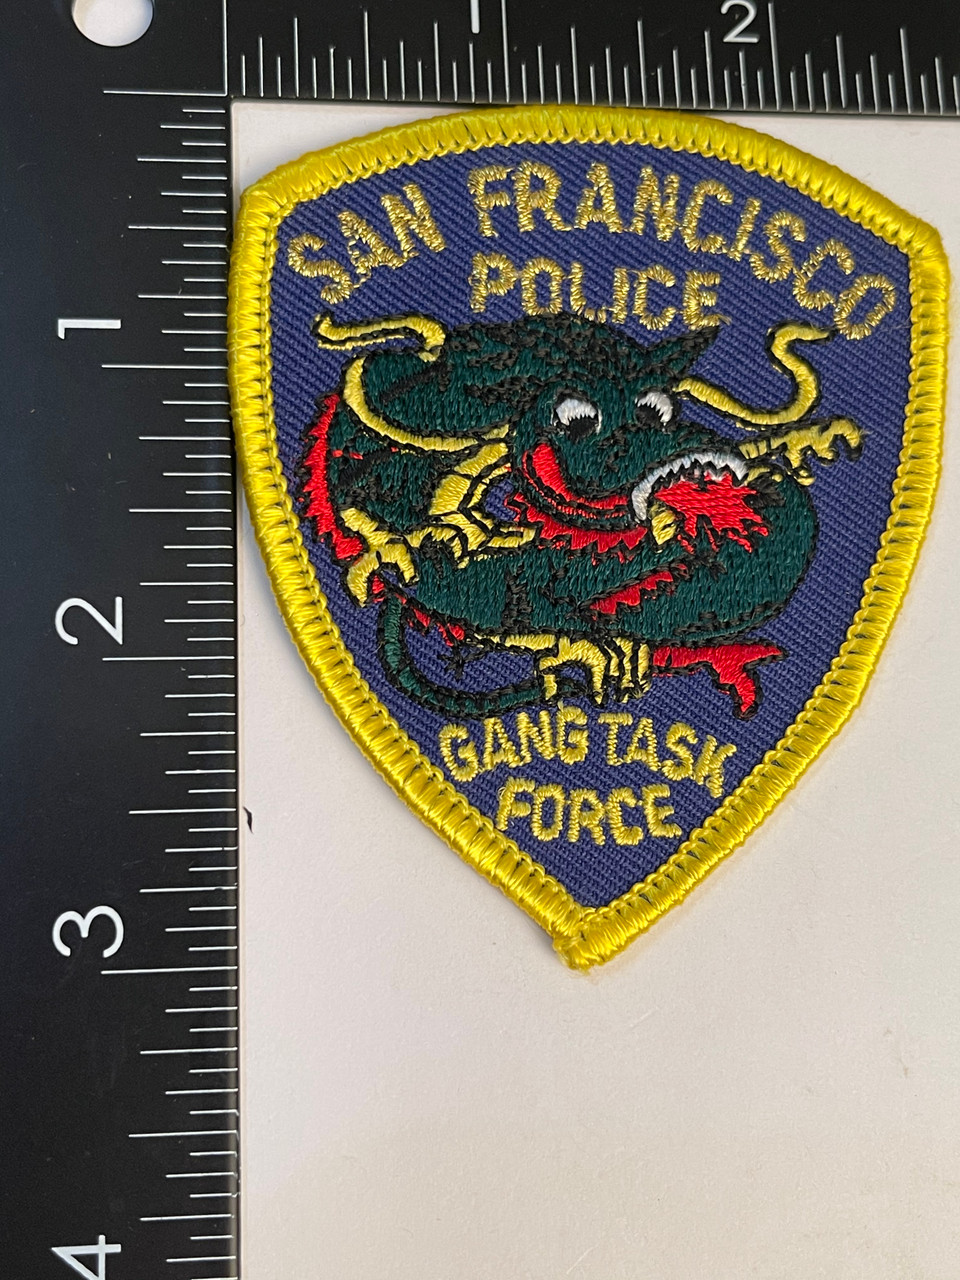 SAN FRANCISCO POLICE GANG TASK FORCE  PATCH 